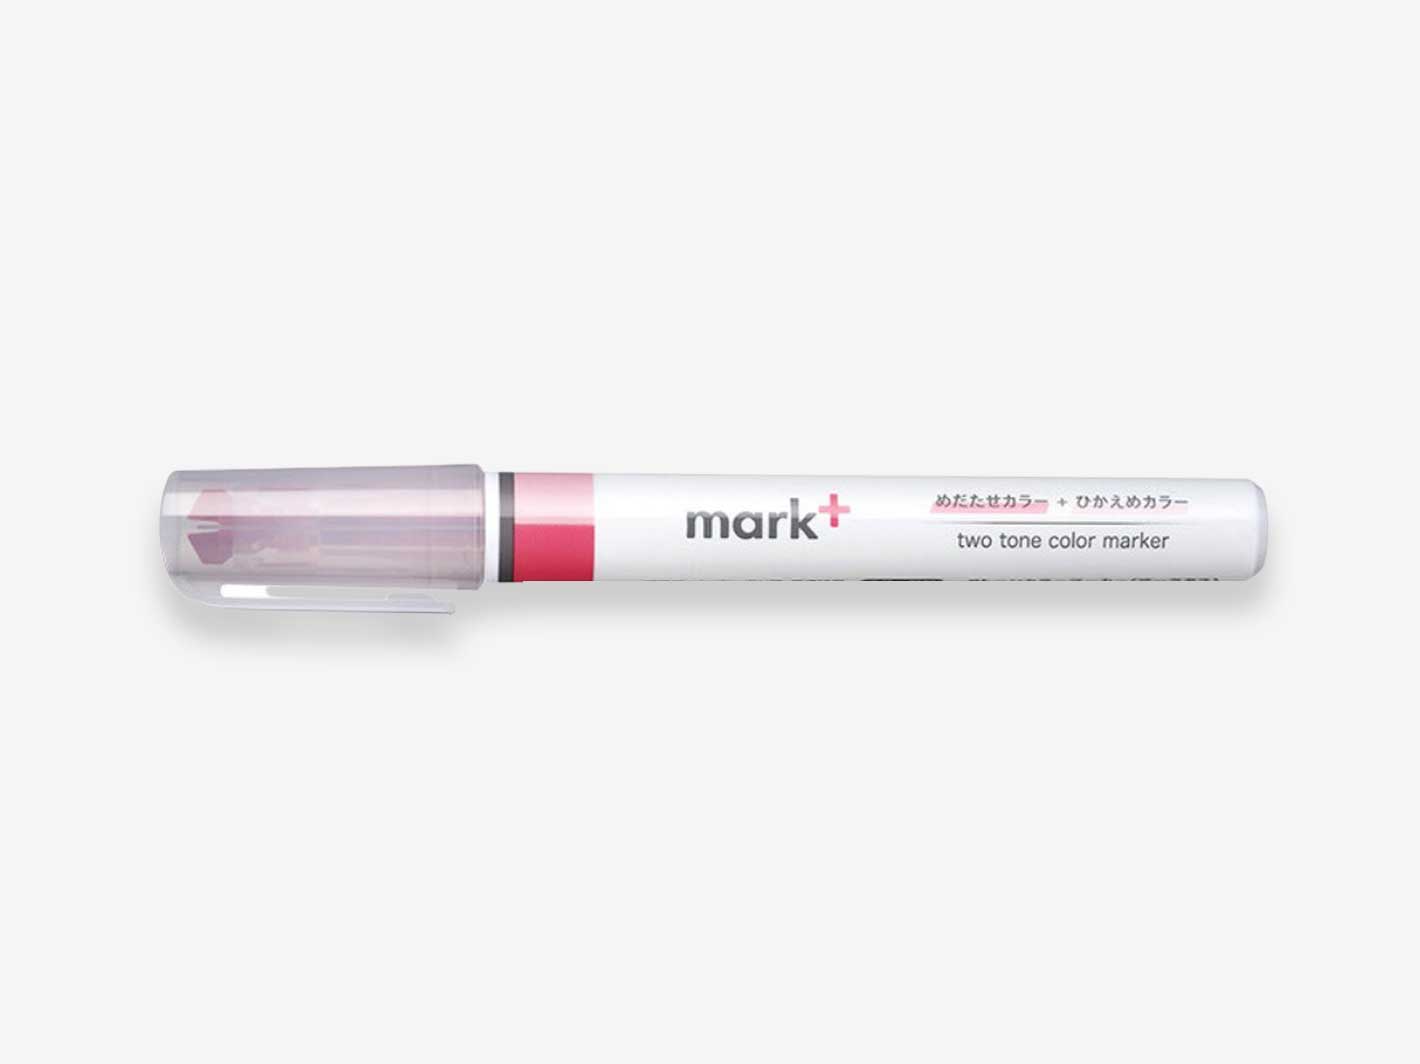 Mark+ 2 Tone Color Marking Pen - Pink